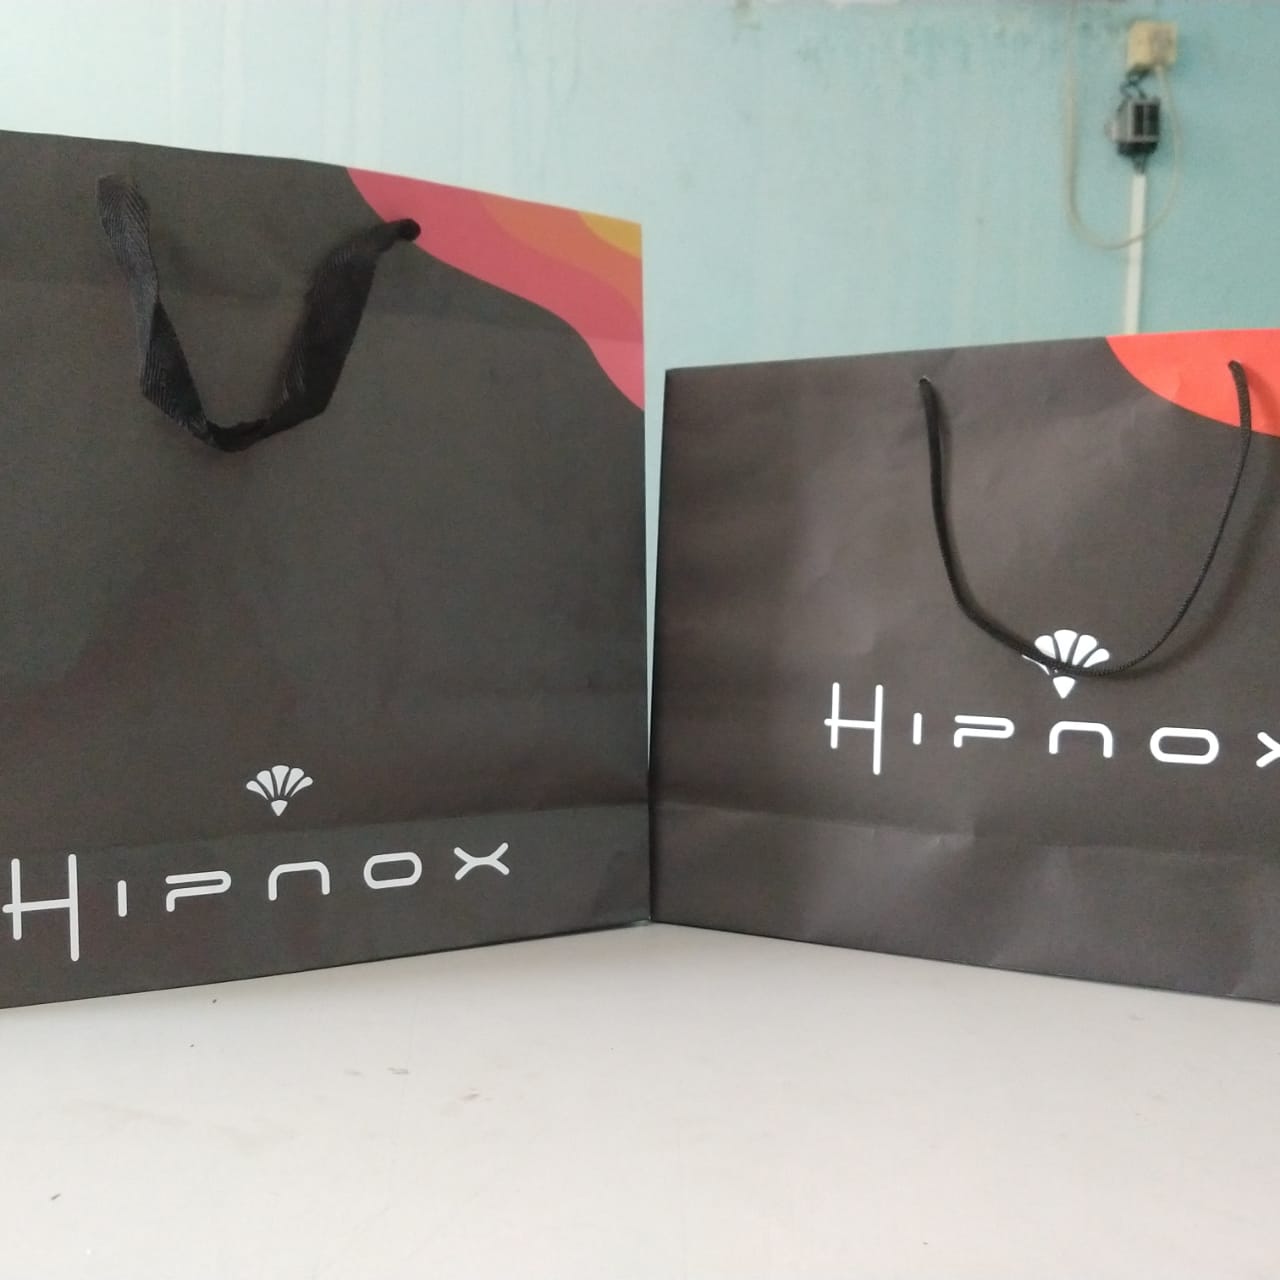 HIPNOX